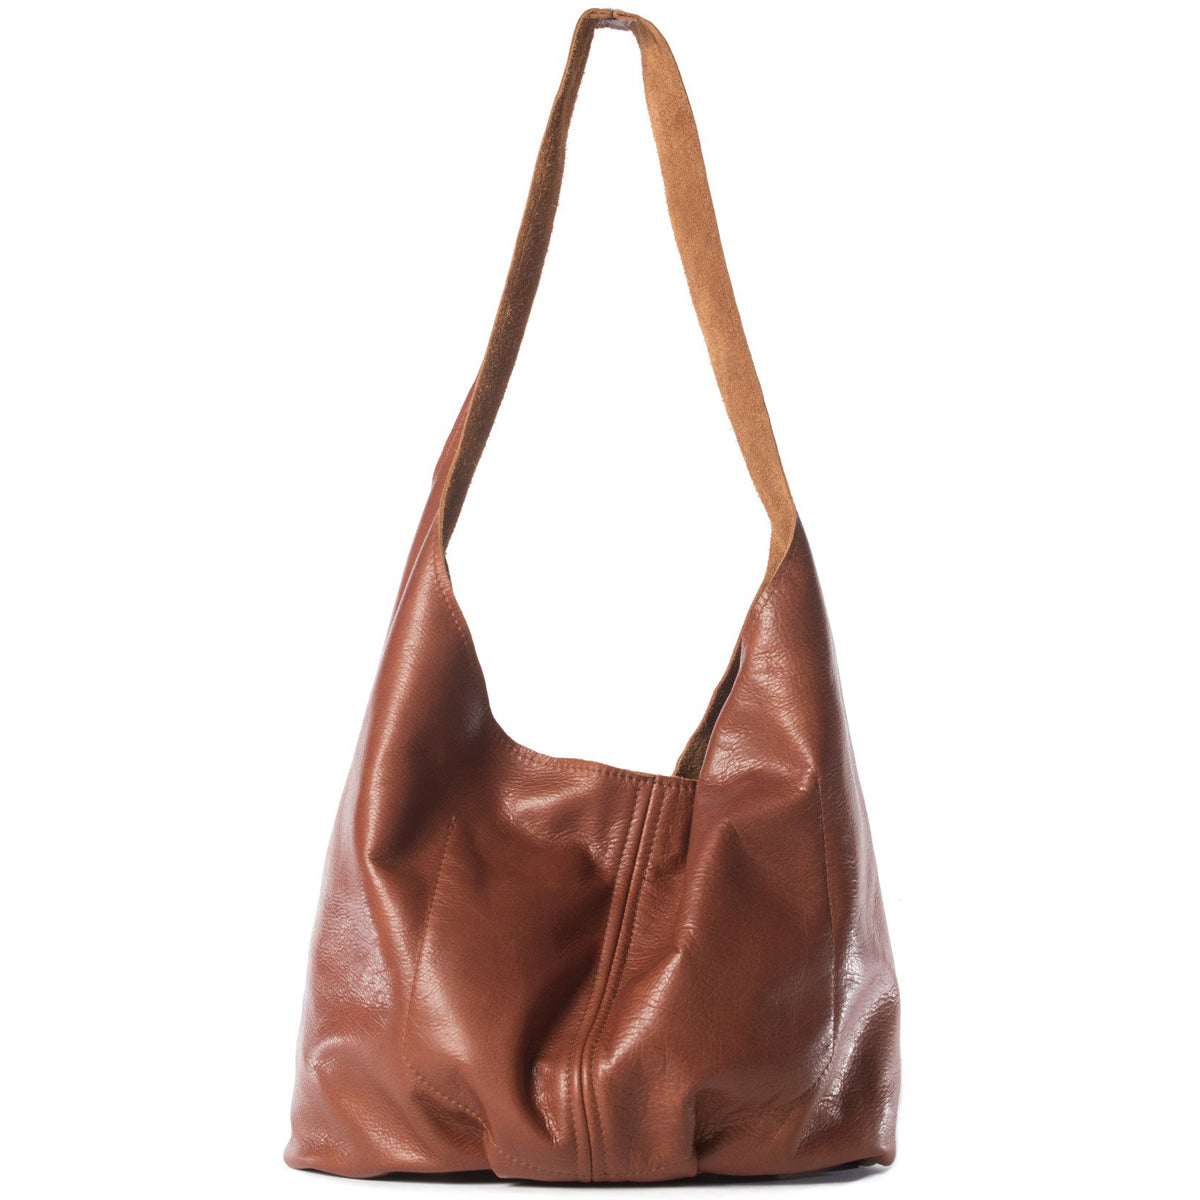  Bourbon leather hobo style handbag handmade in the USA by Vicki Jean. 